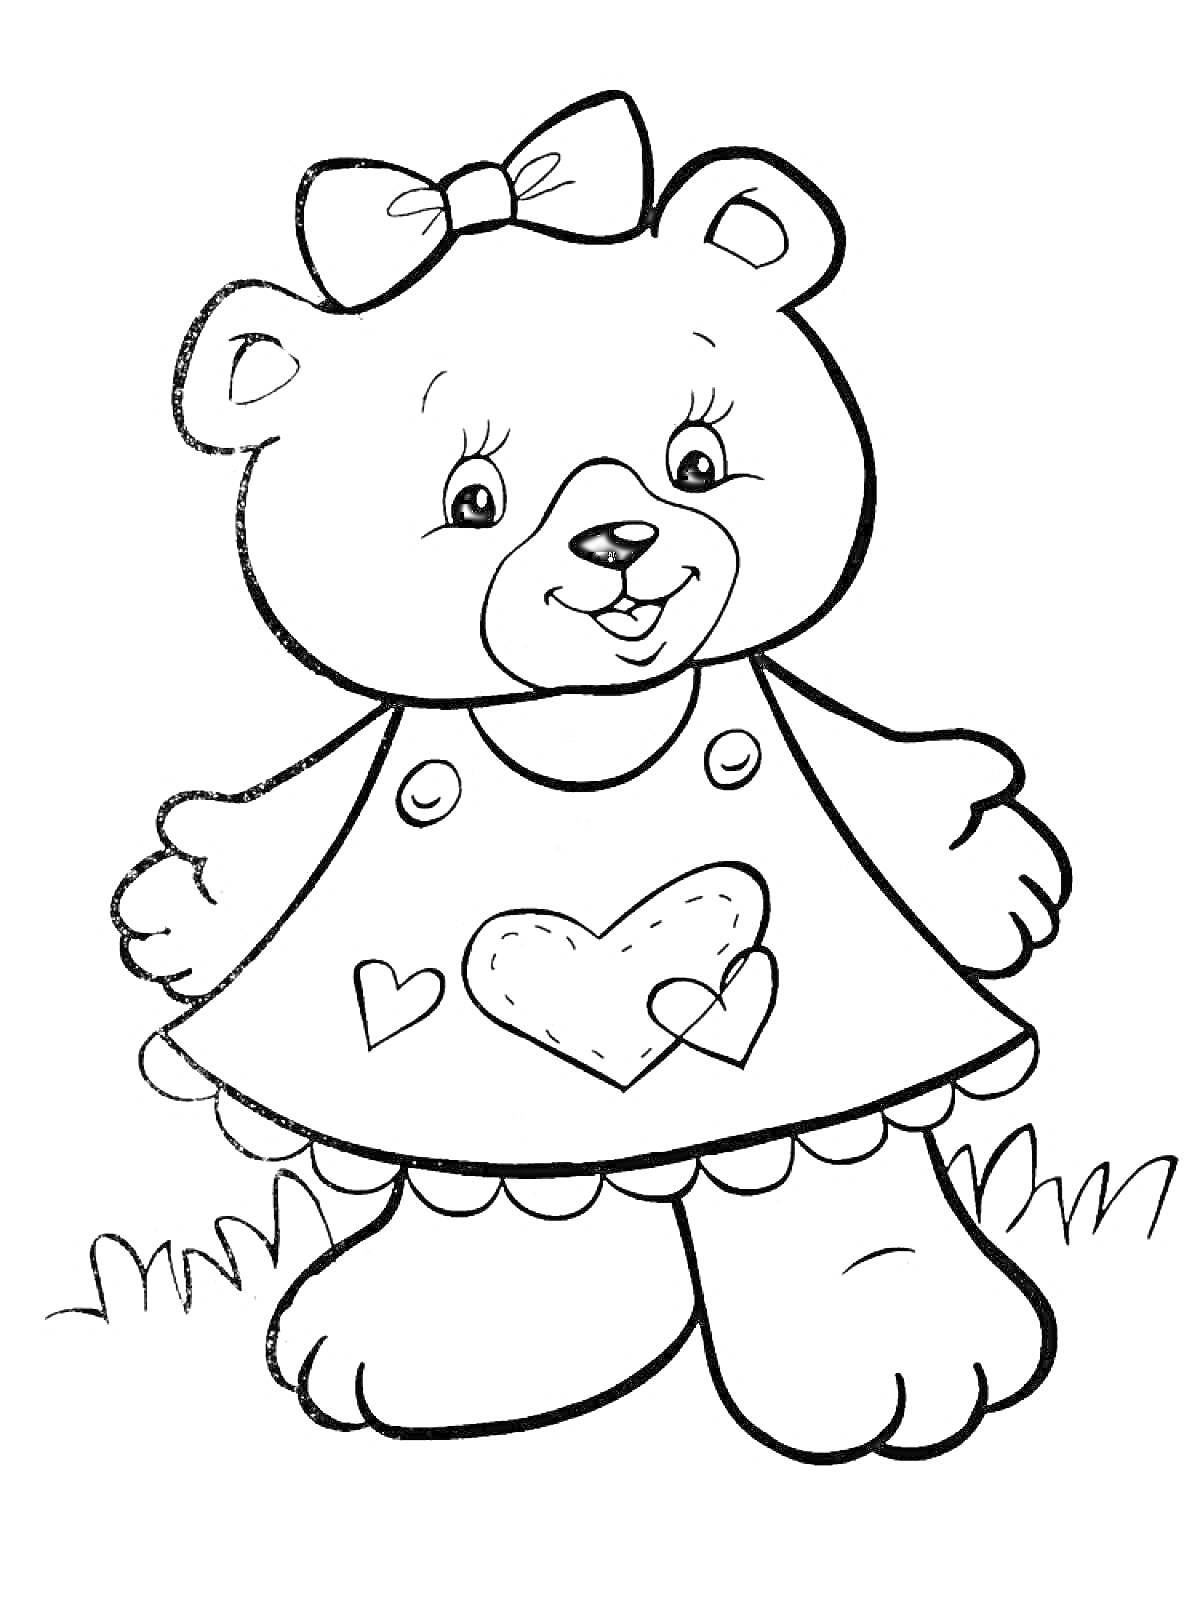 Раскраска Медвежонок с сердечками на платье и бантом на голове на траве